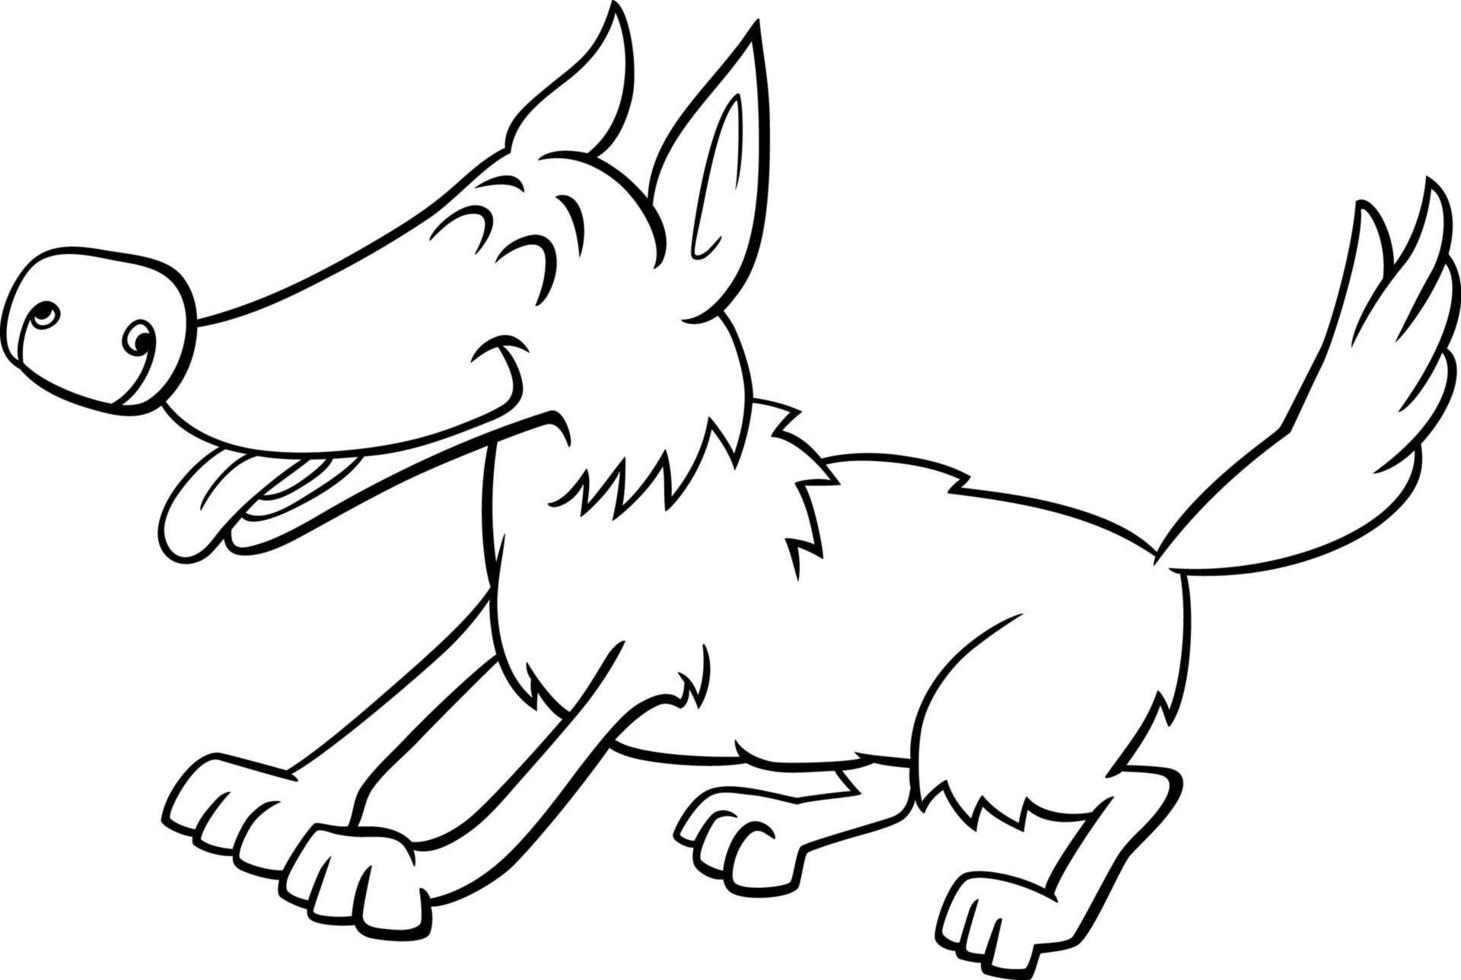 cartoon playful dog animal character coloring page vector